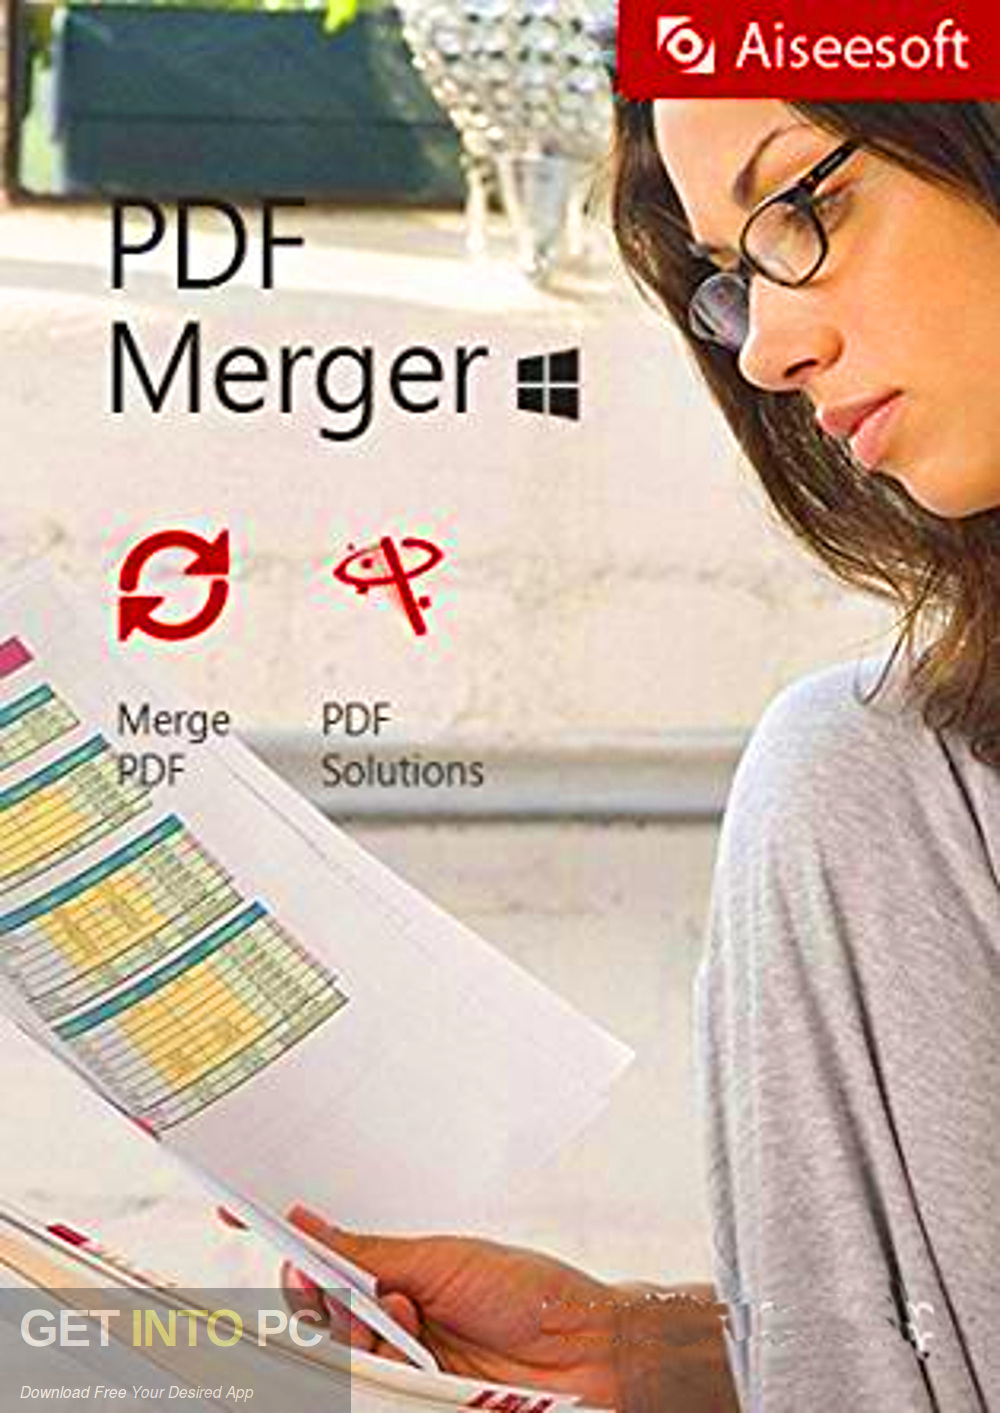 Aiseesoft PDF Merger Free Download-GetintoPC.com